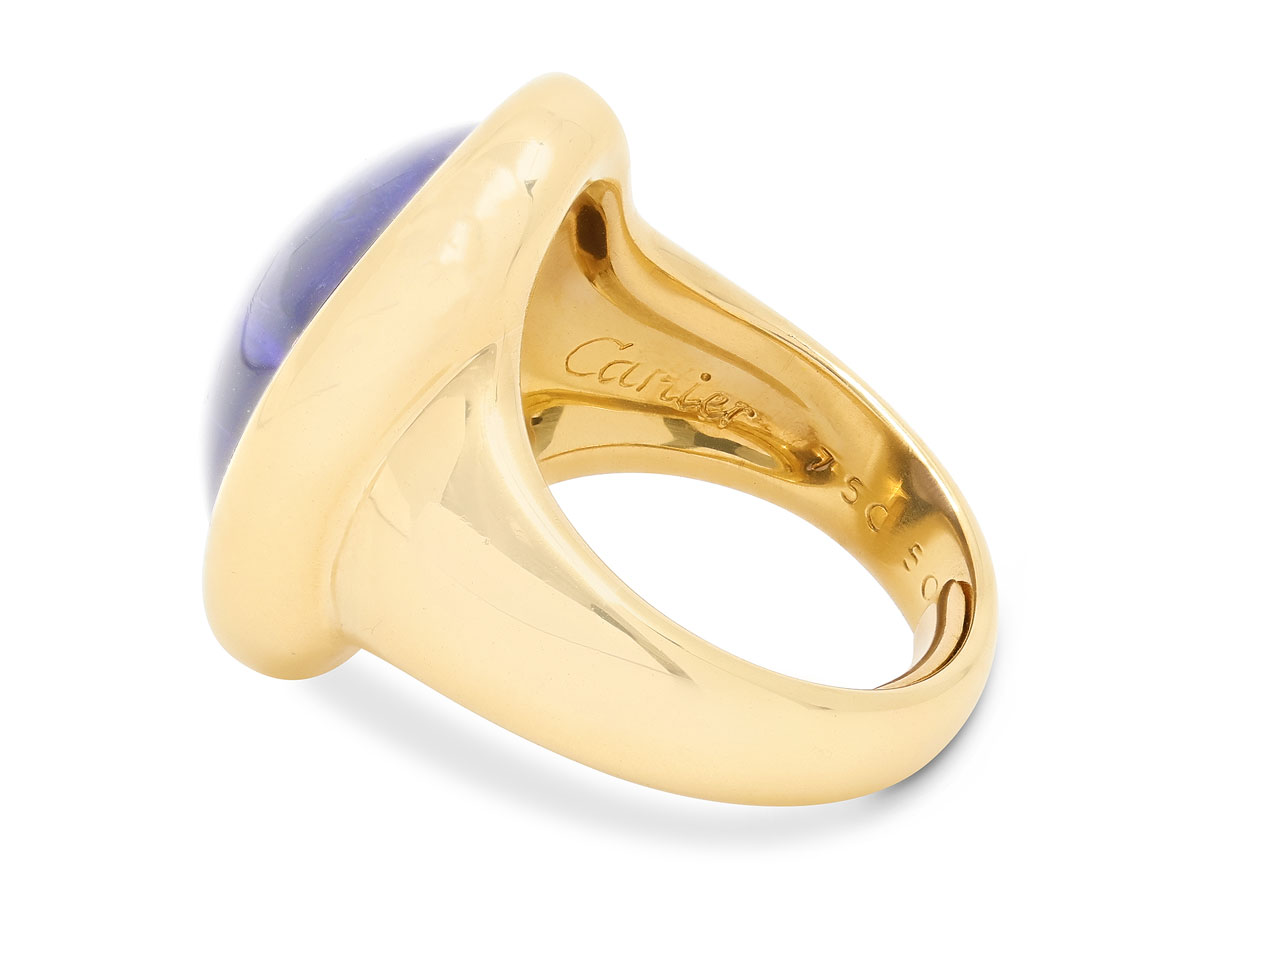 Cartier 'Baignoire' Iolite Ring in 18K Gold